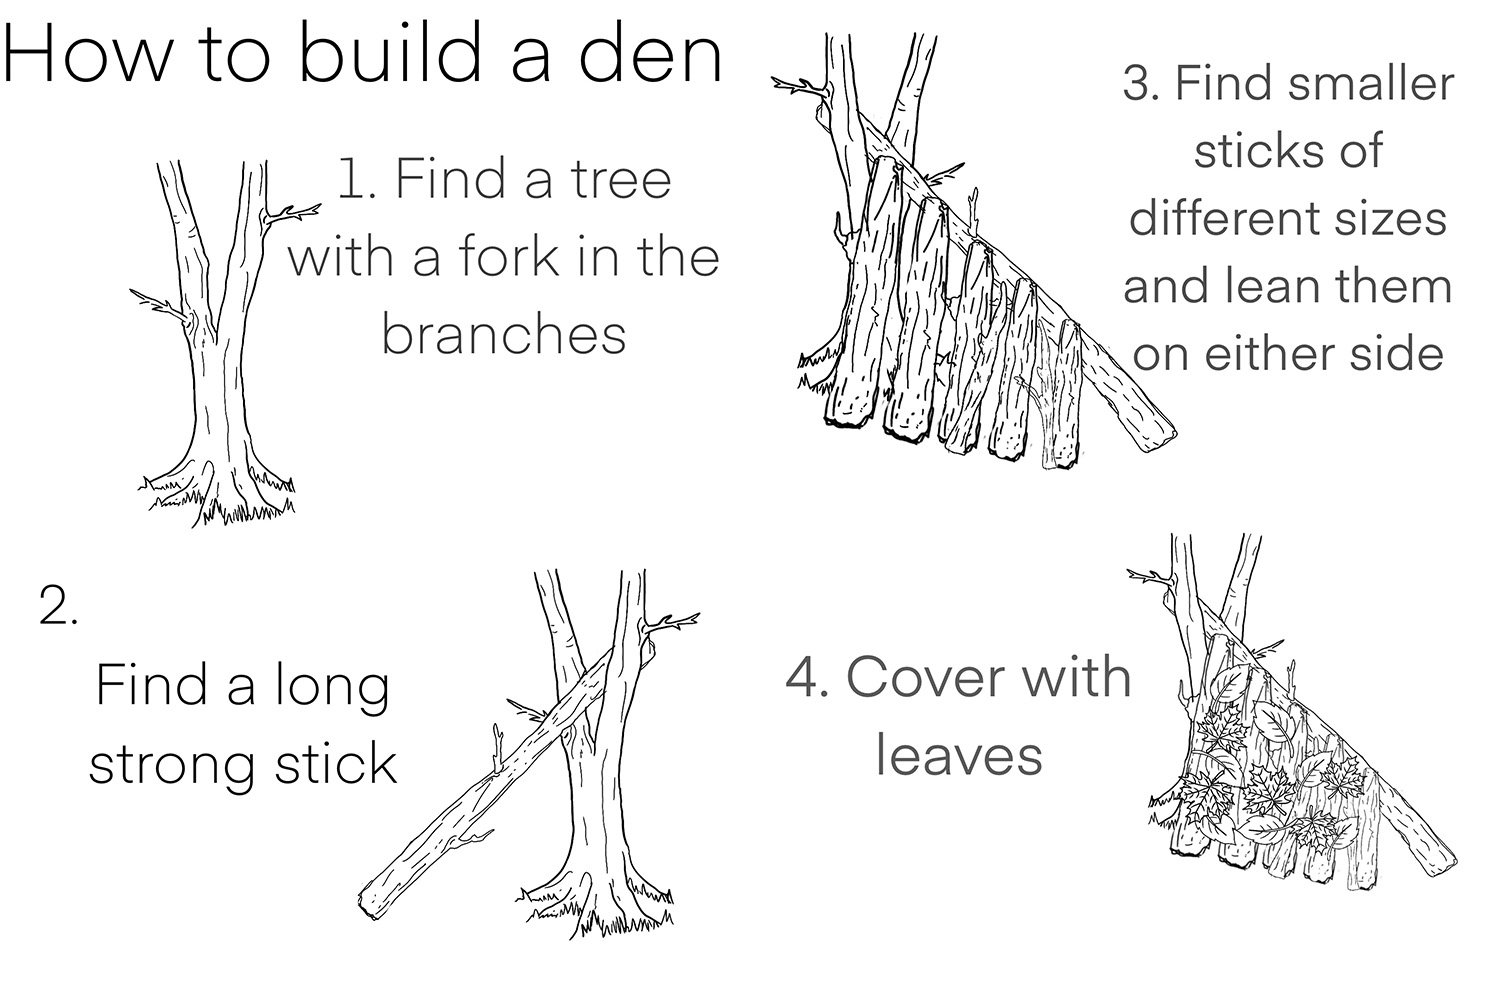 How to build a den landscape copy.jpg